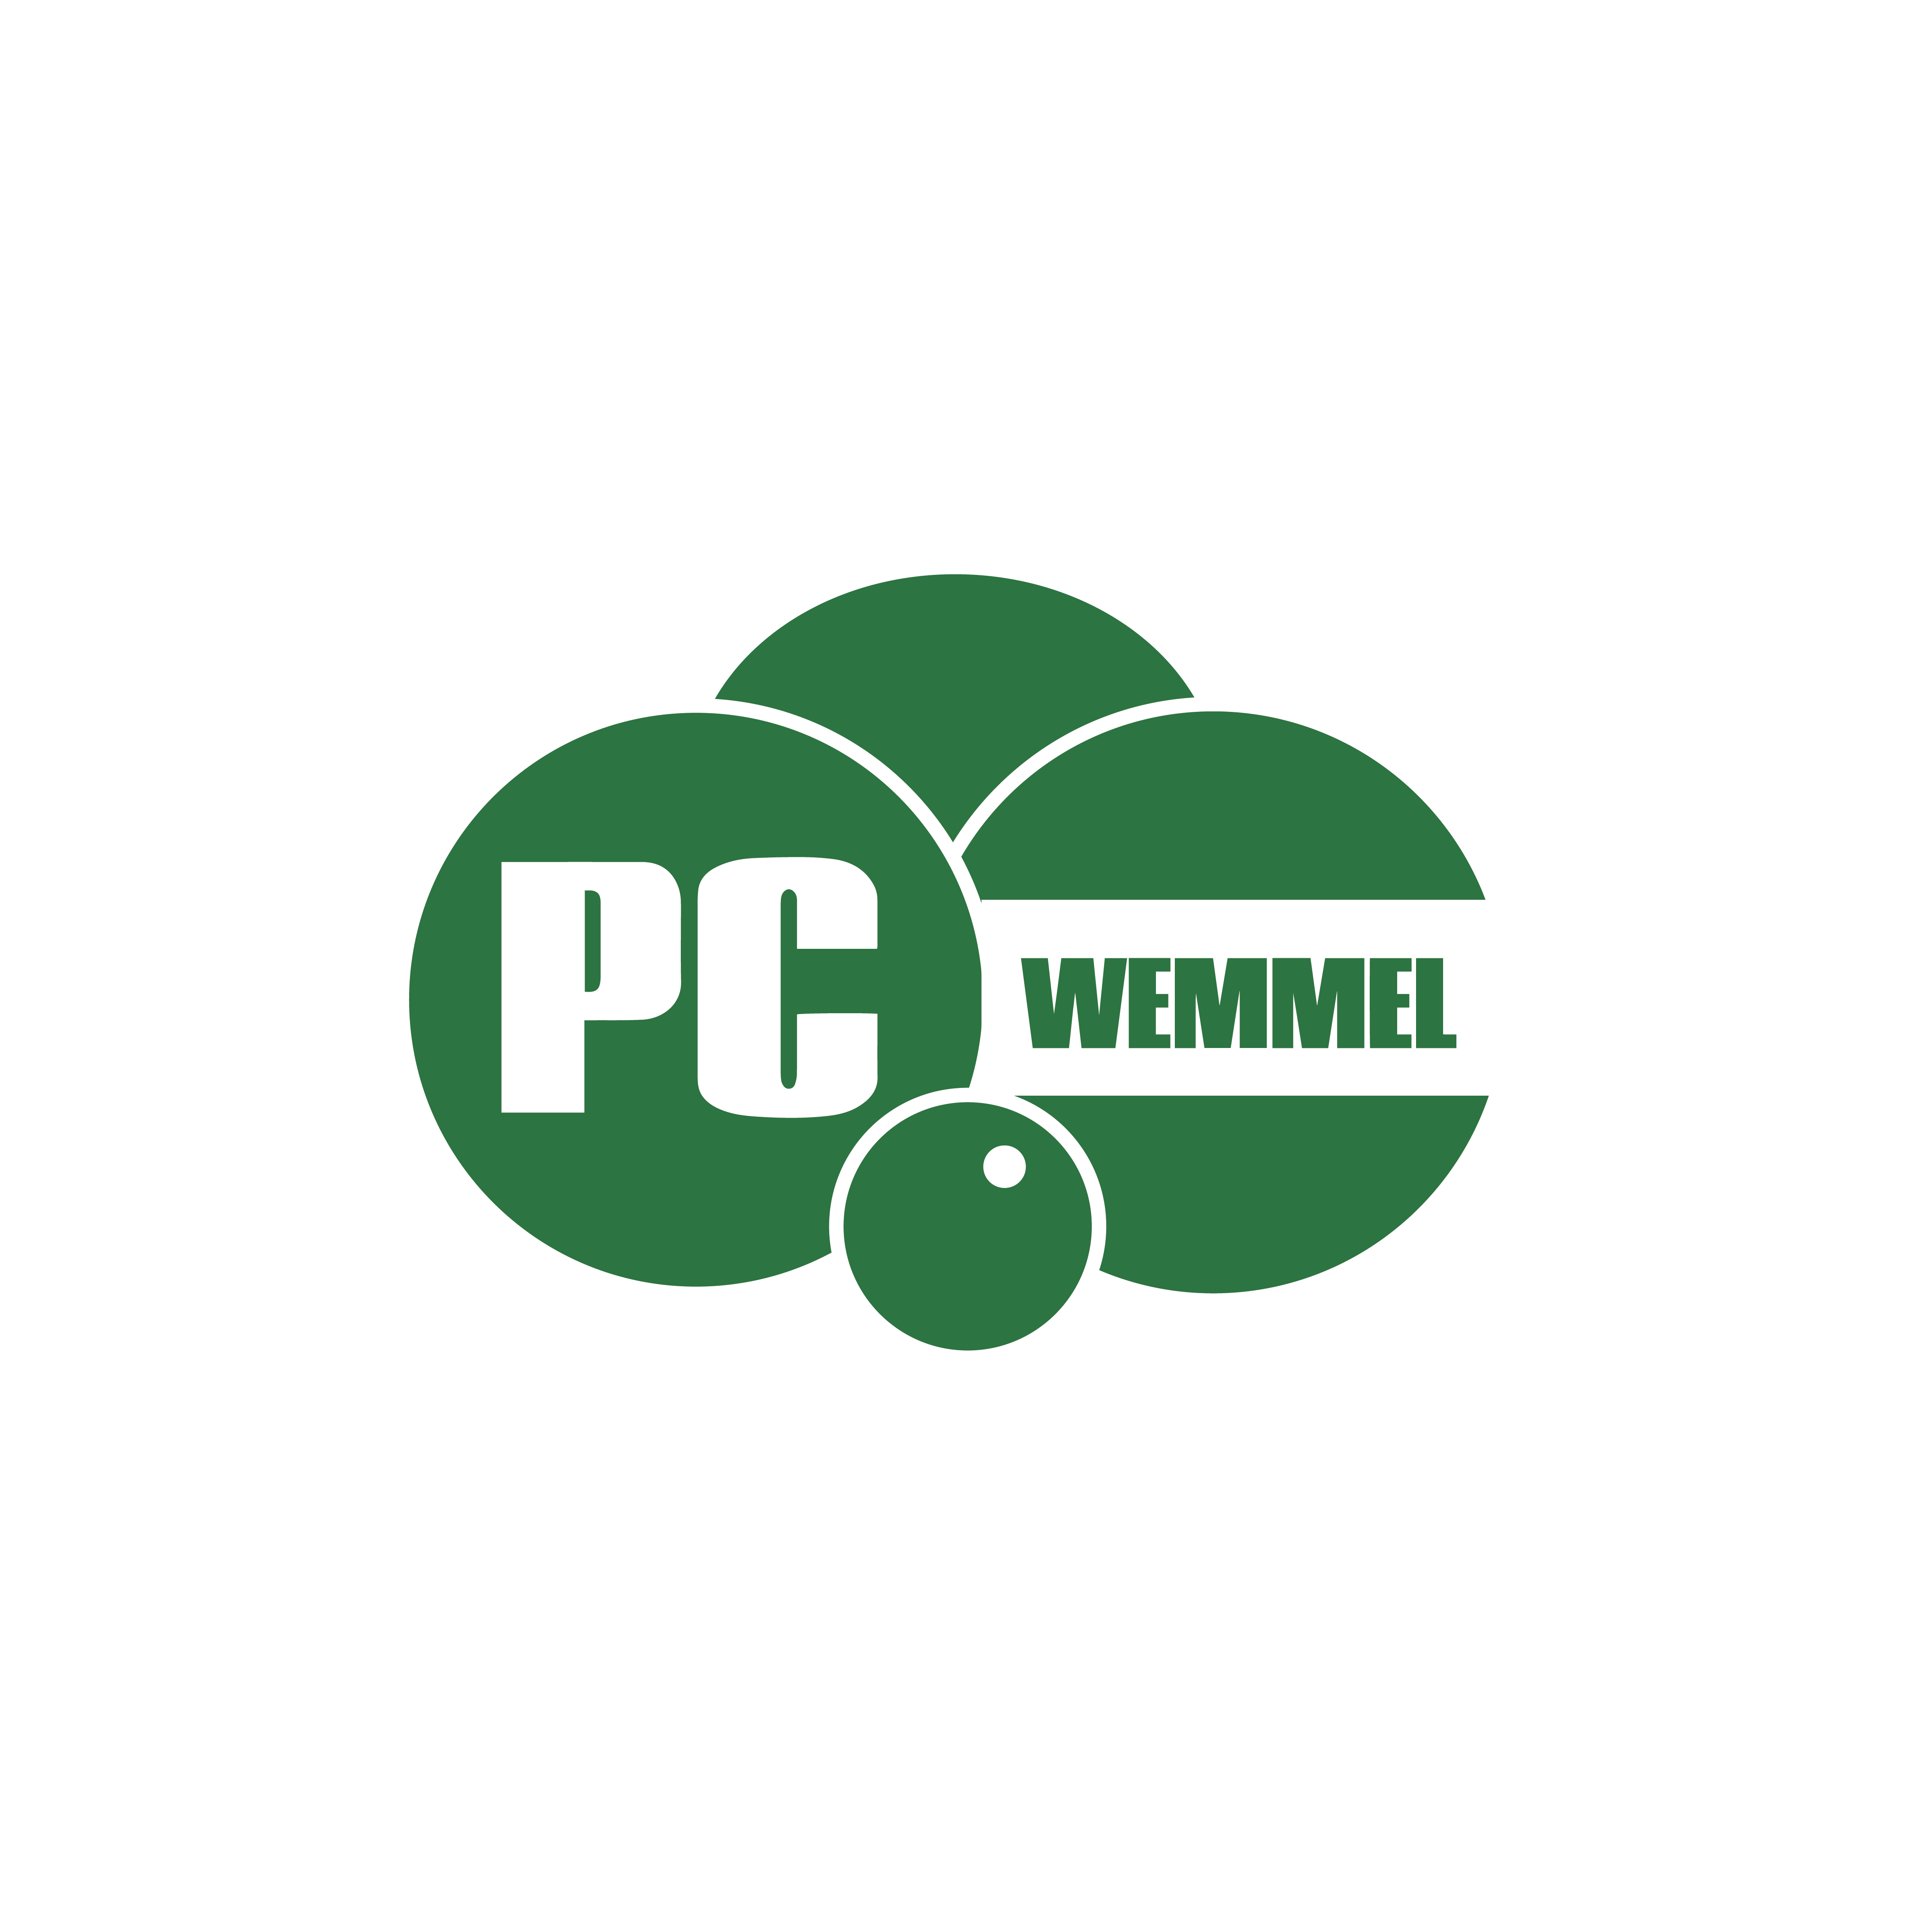 PC-wemmel